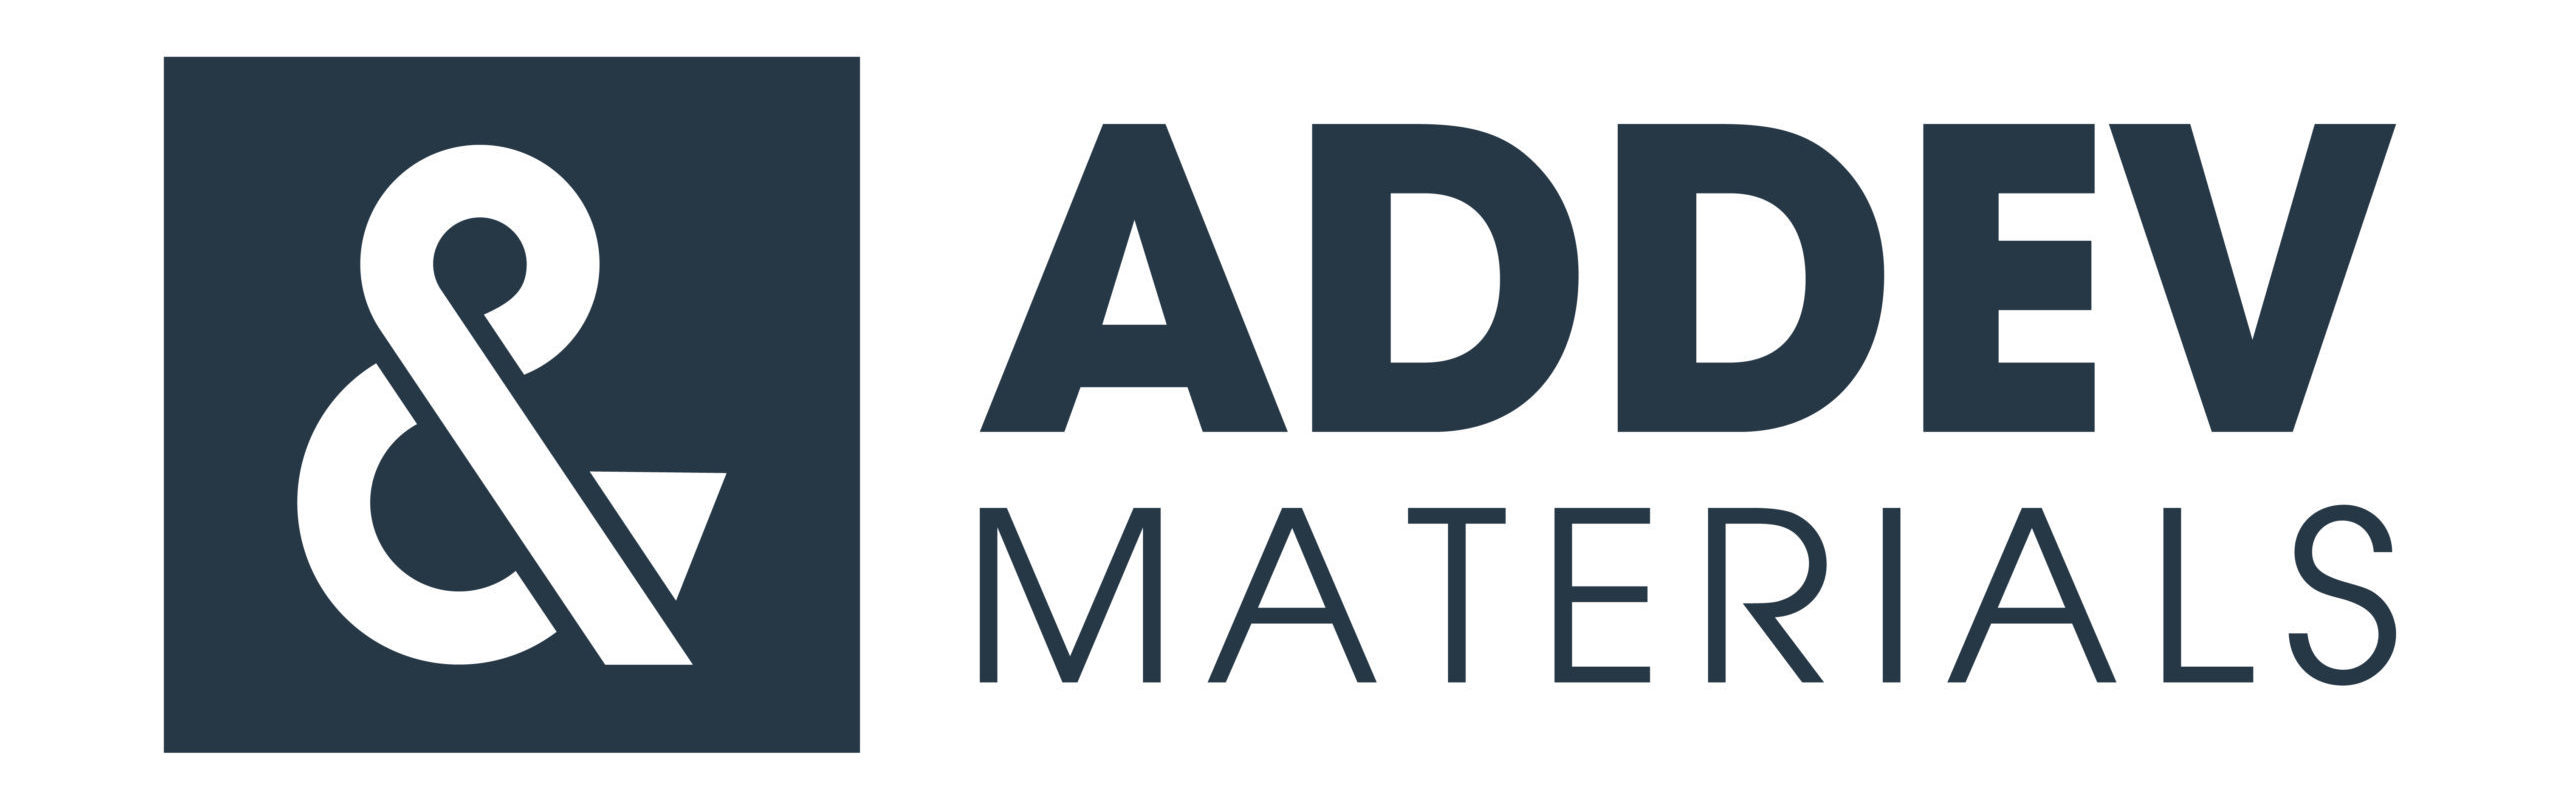 ADDEV Materials - Corporate